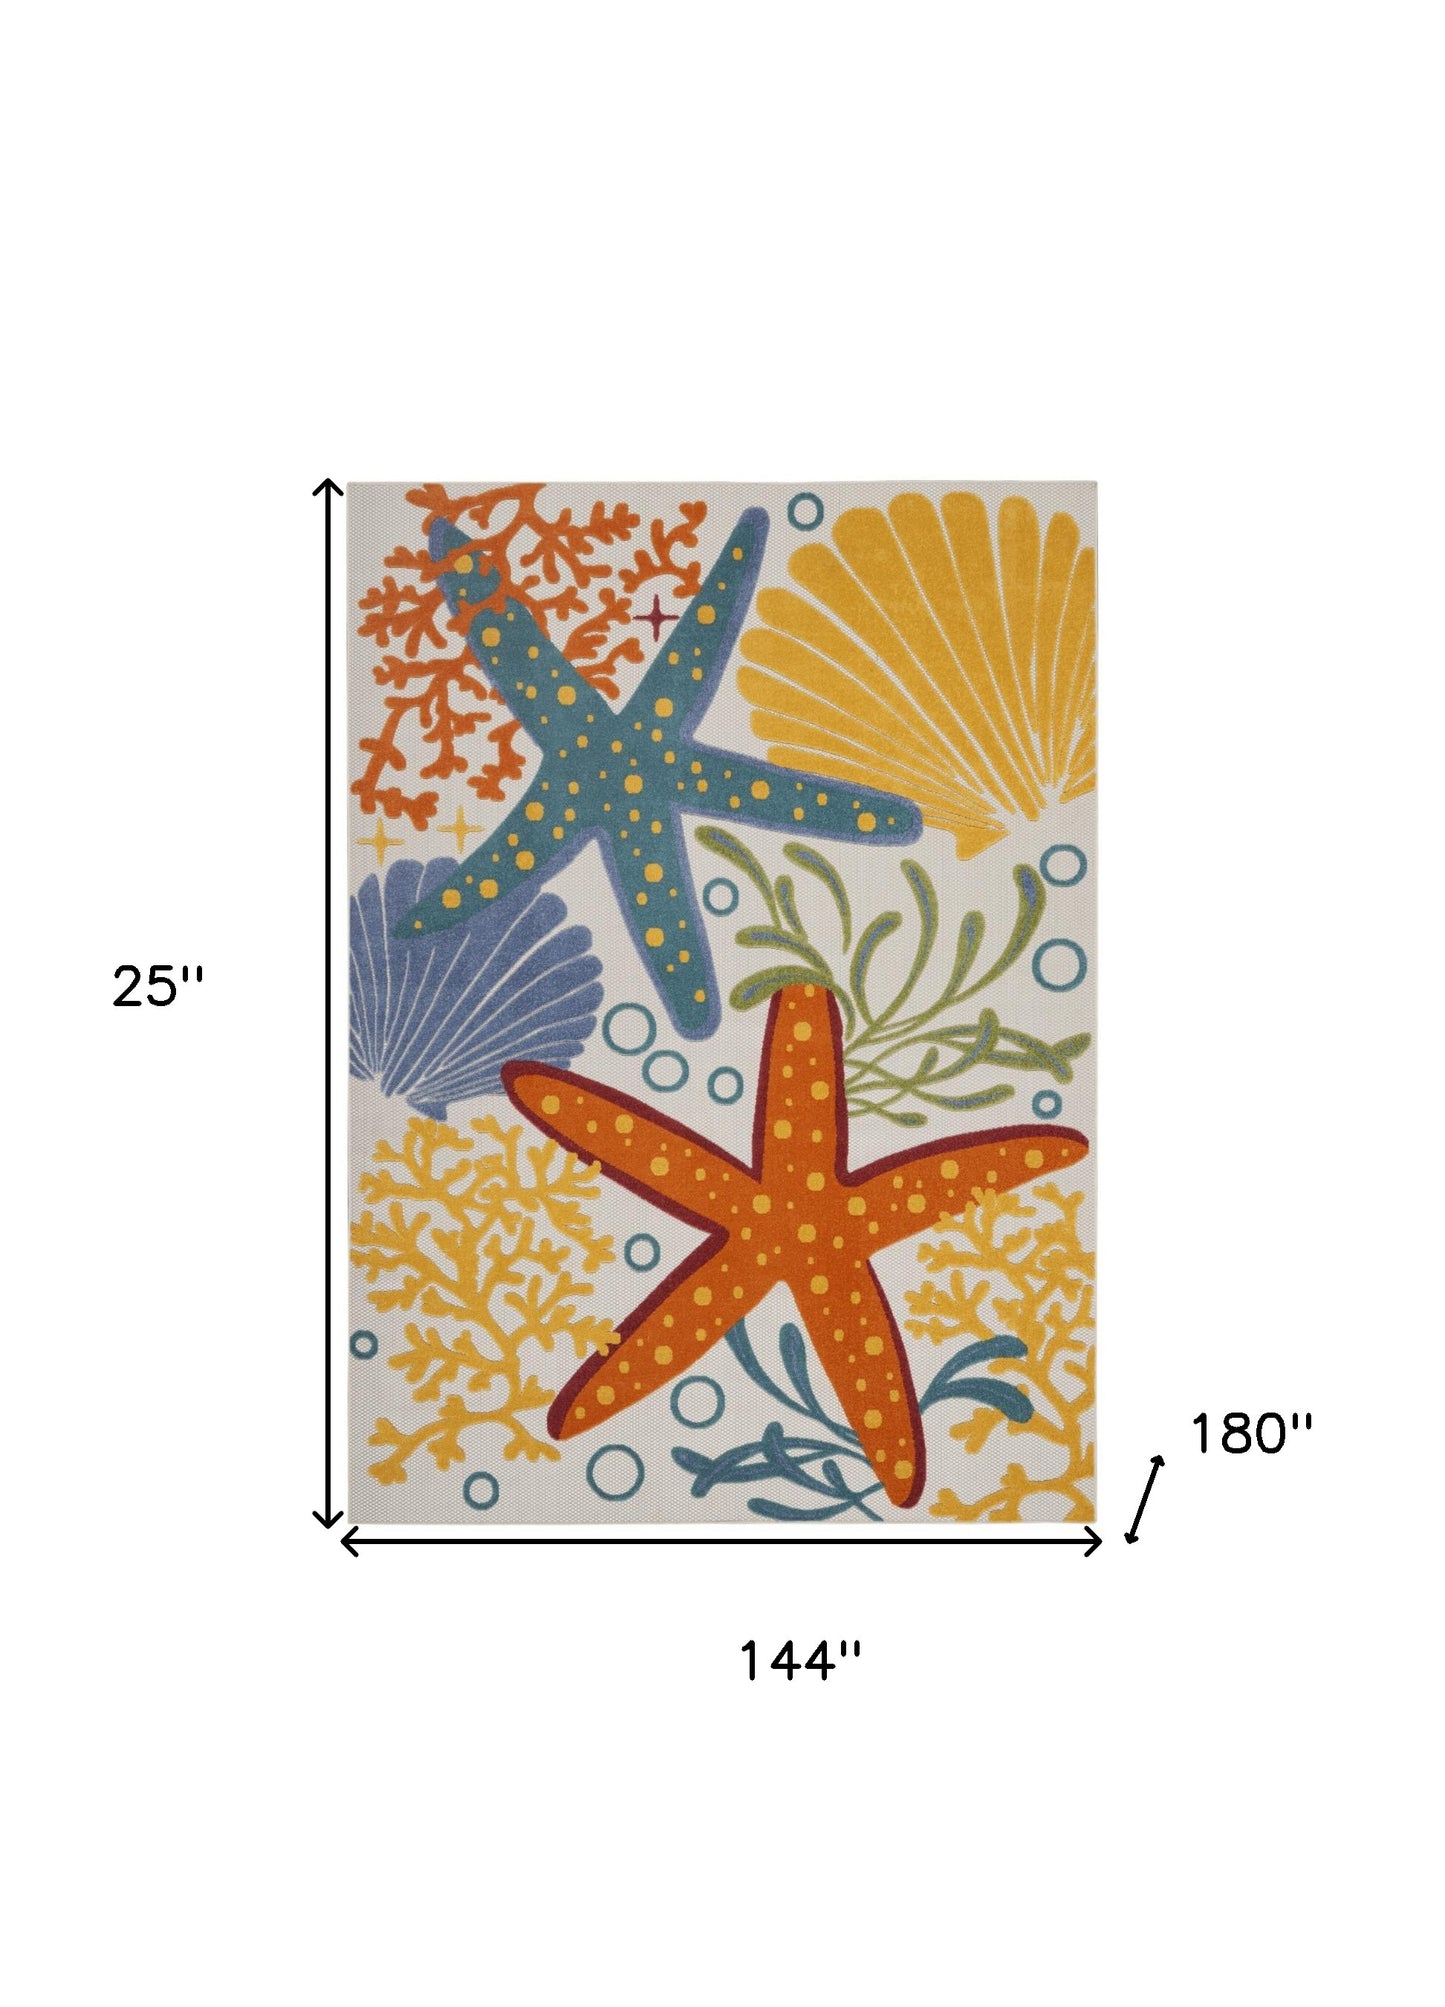 12' X 15' Orange Blue And Yellow Animal Print Non Skid Indoor Outdoor Area Rug